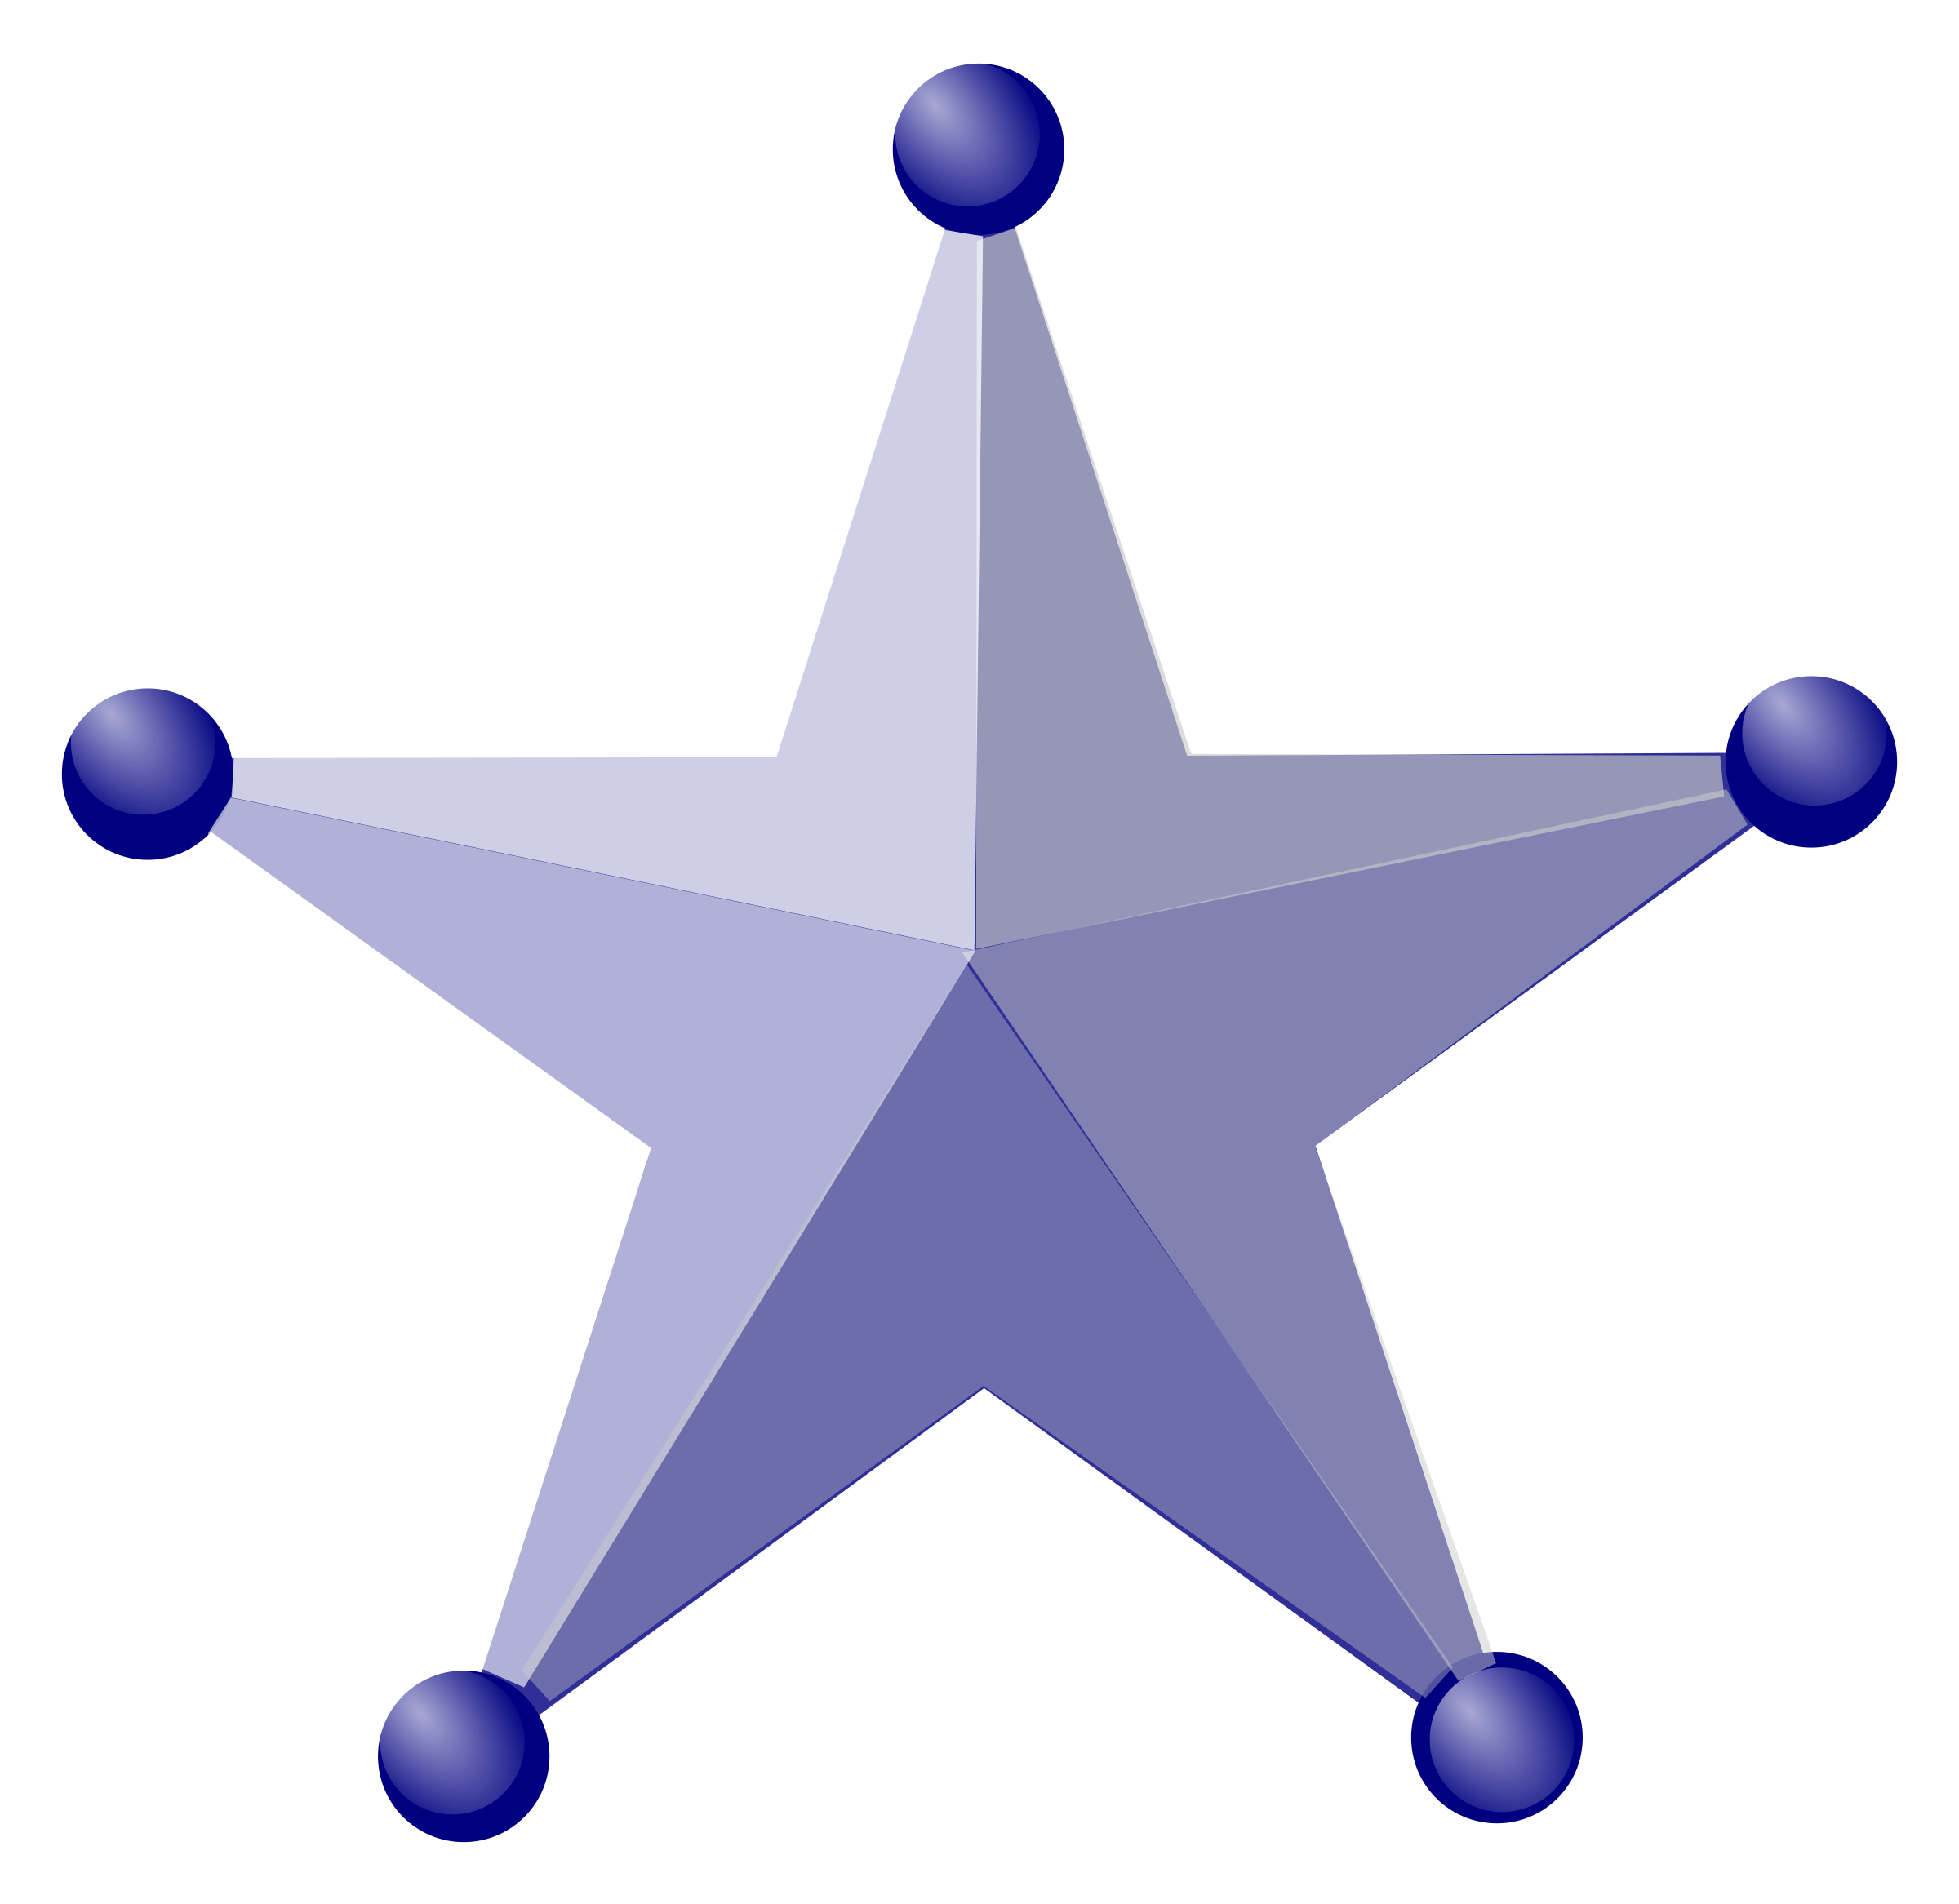 Download Blue 3d Star Vector Clipart image - Free stock photo - Public Domain photo - CC0 Images